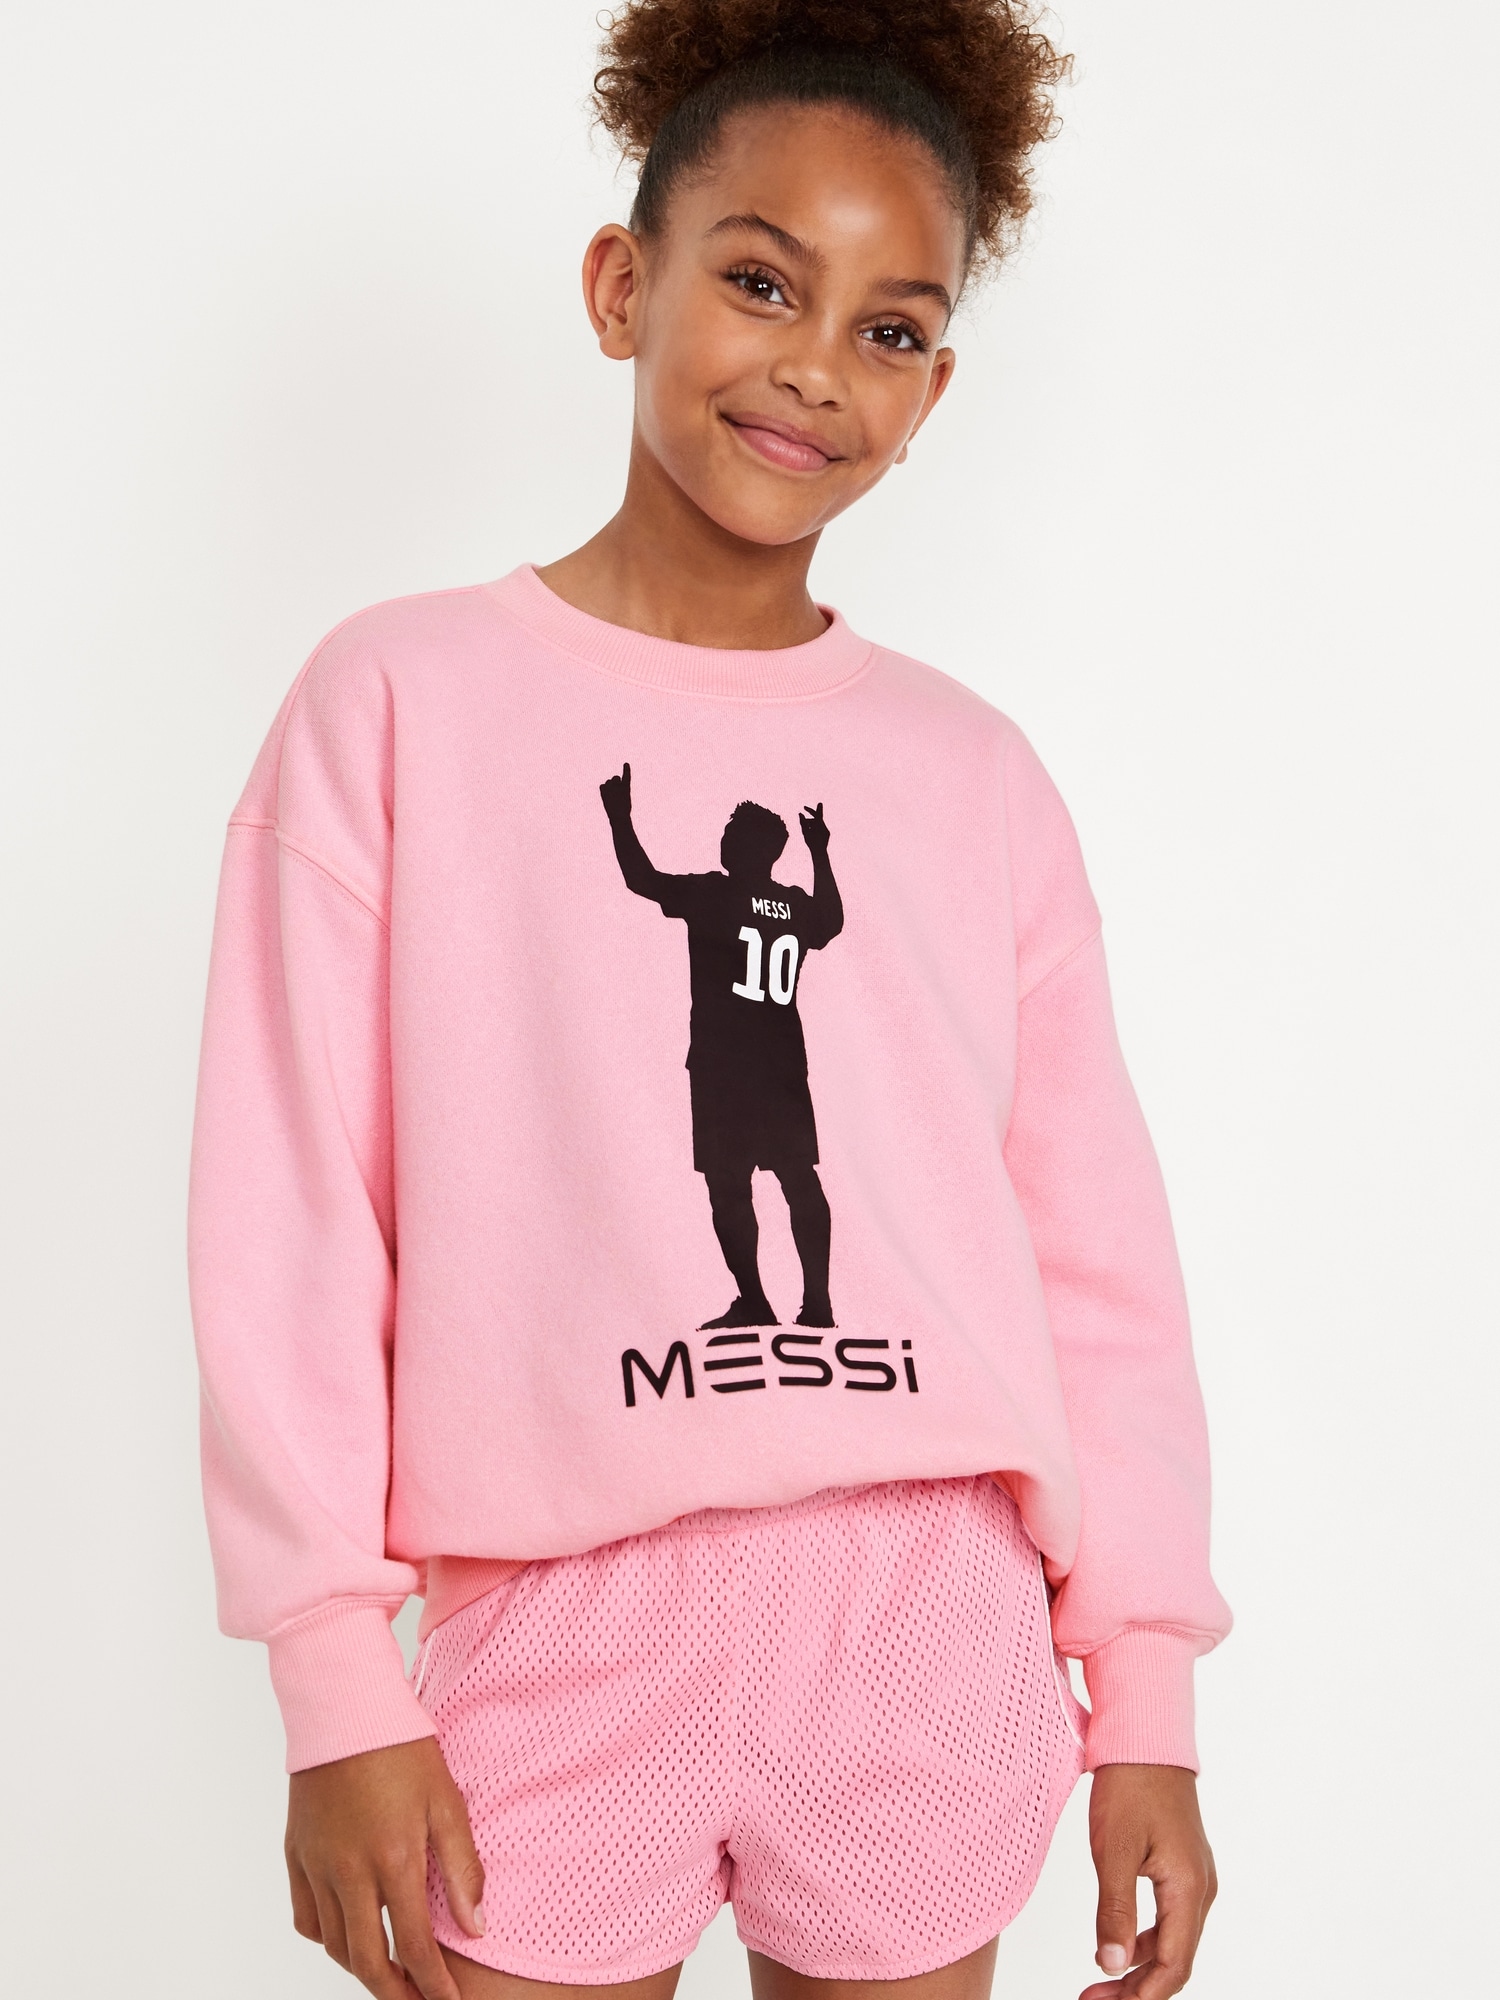 Messi™ Oversized Graphic Sweatshirt for Girls